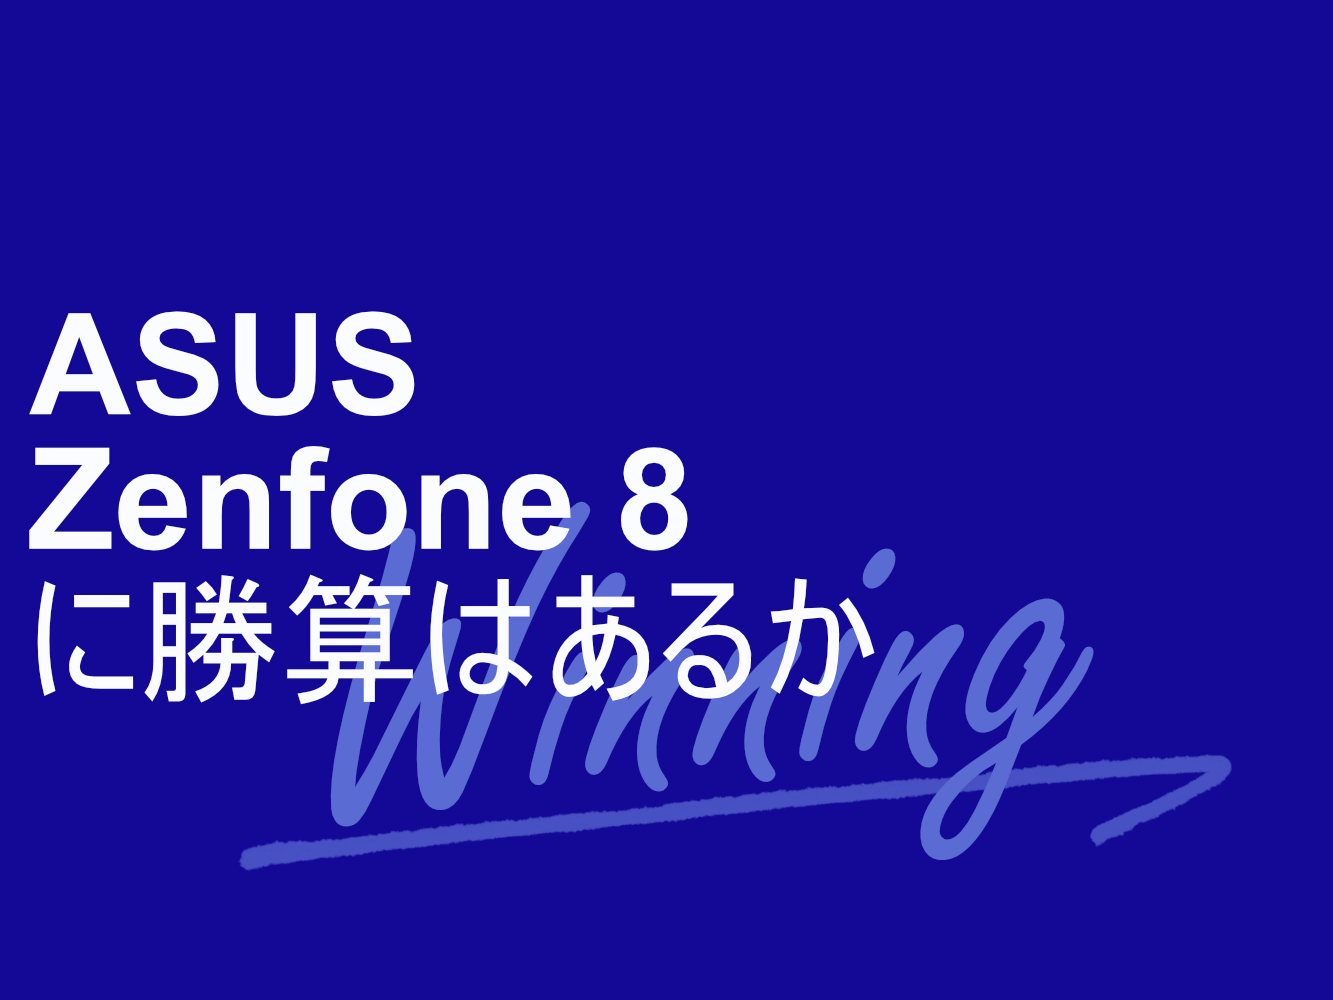 ASUSのZenfone 8シリーズでの勝算【コラム】 | telektlist